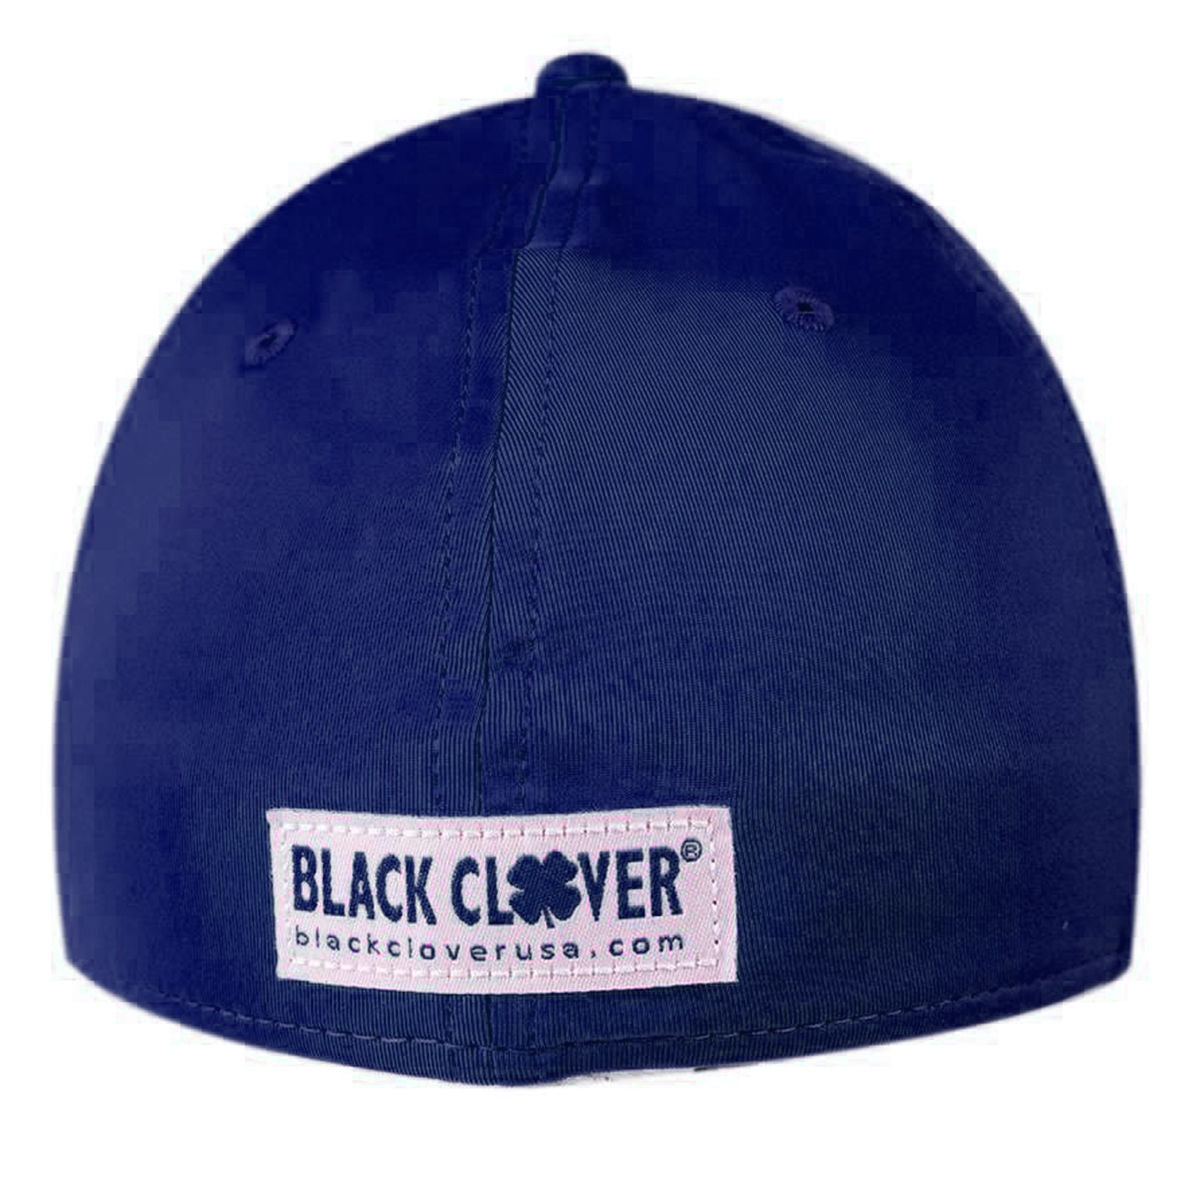 BLACK CLOVER PREMIUM CLOVER 30 HAT SM/MED - AtlanticCoastSports